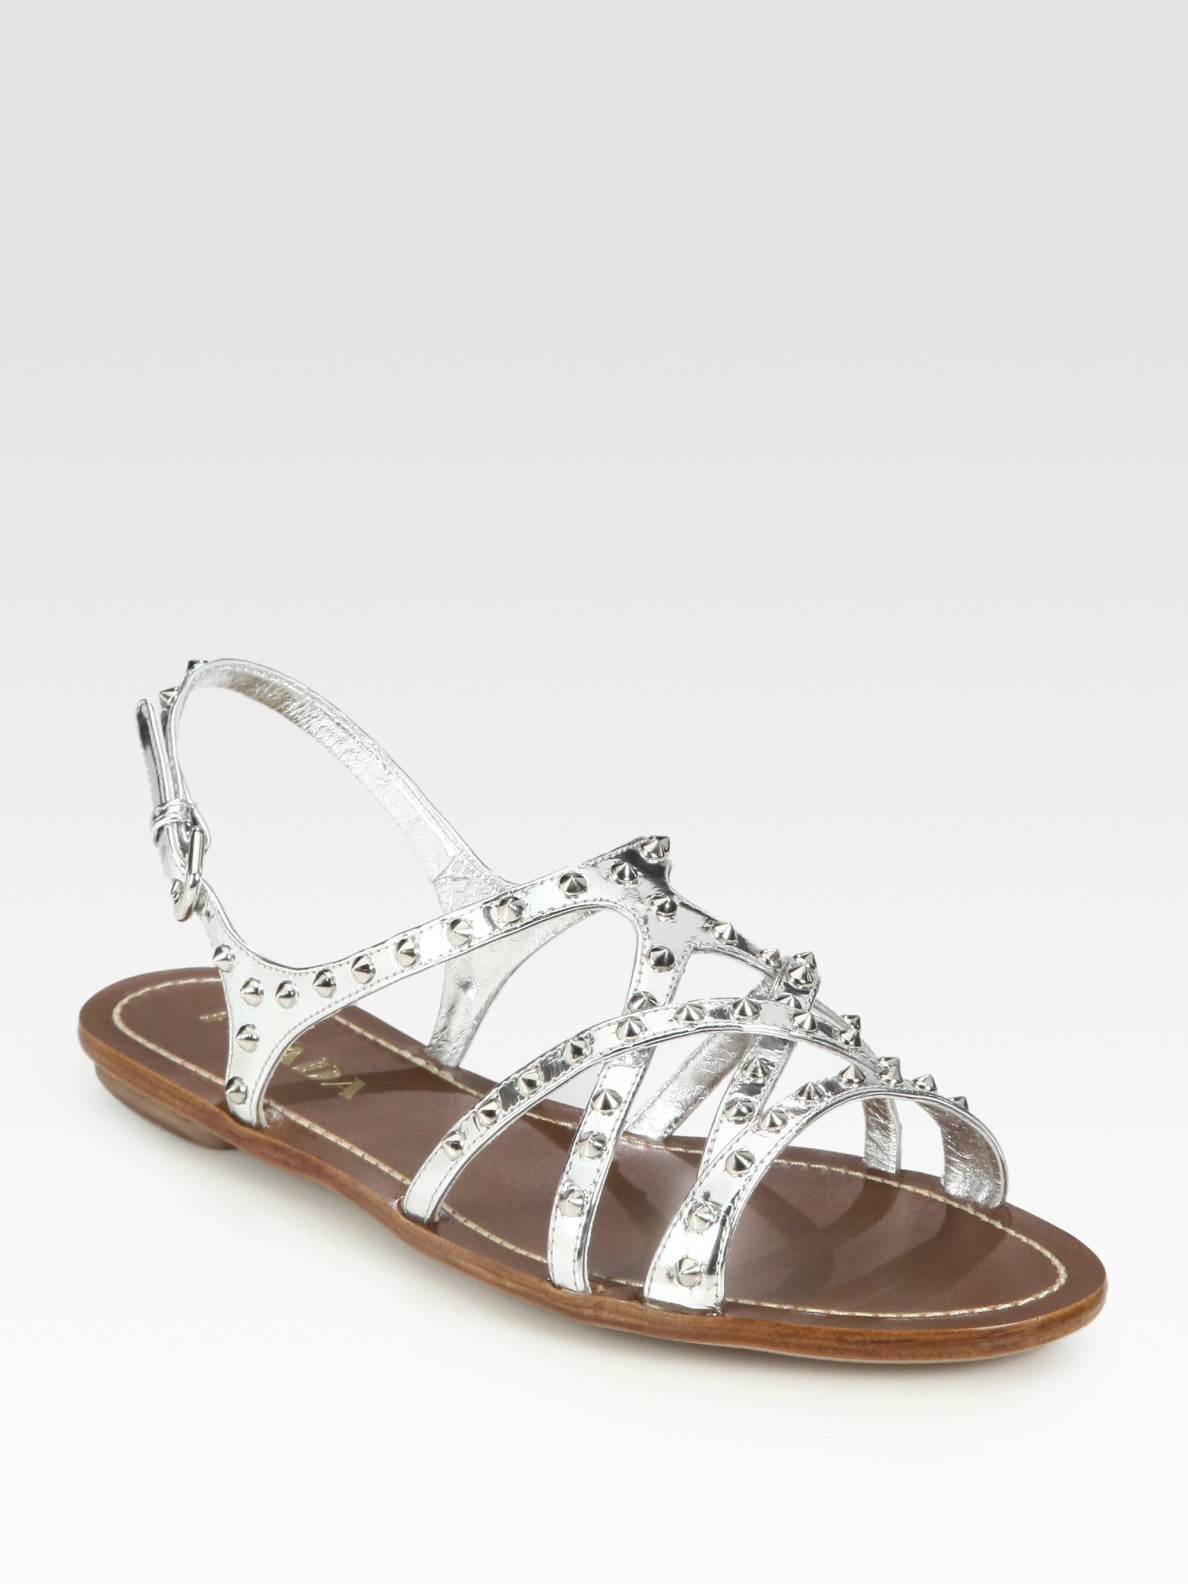 Prada Metallic Leather Studded Flat Sandals in Silver | Lyst